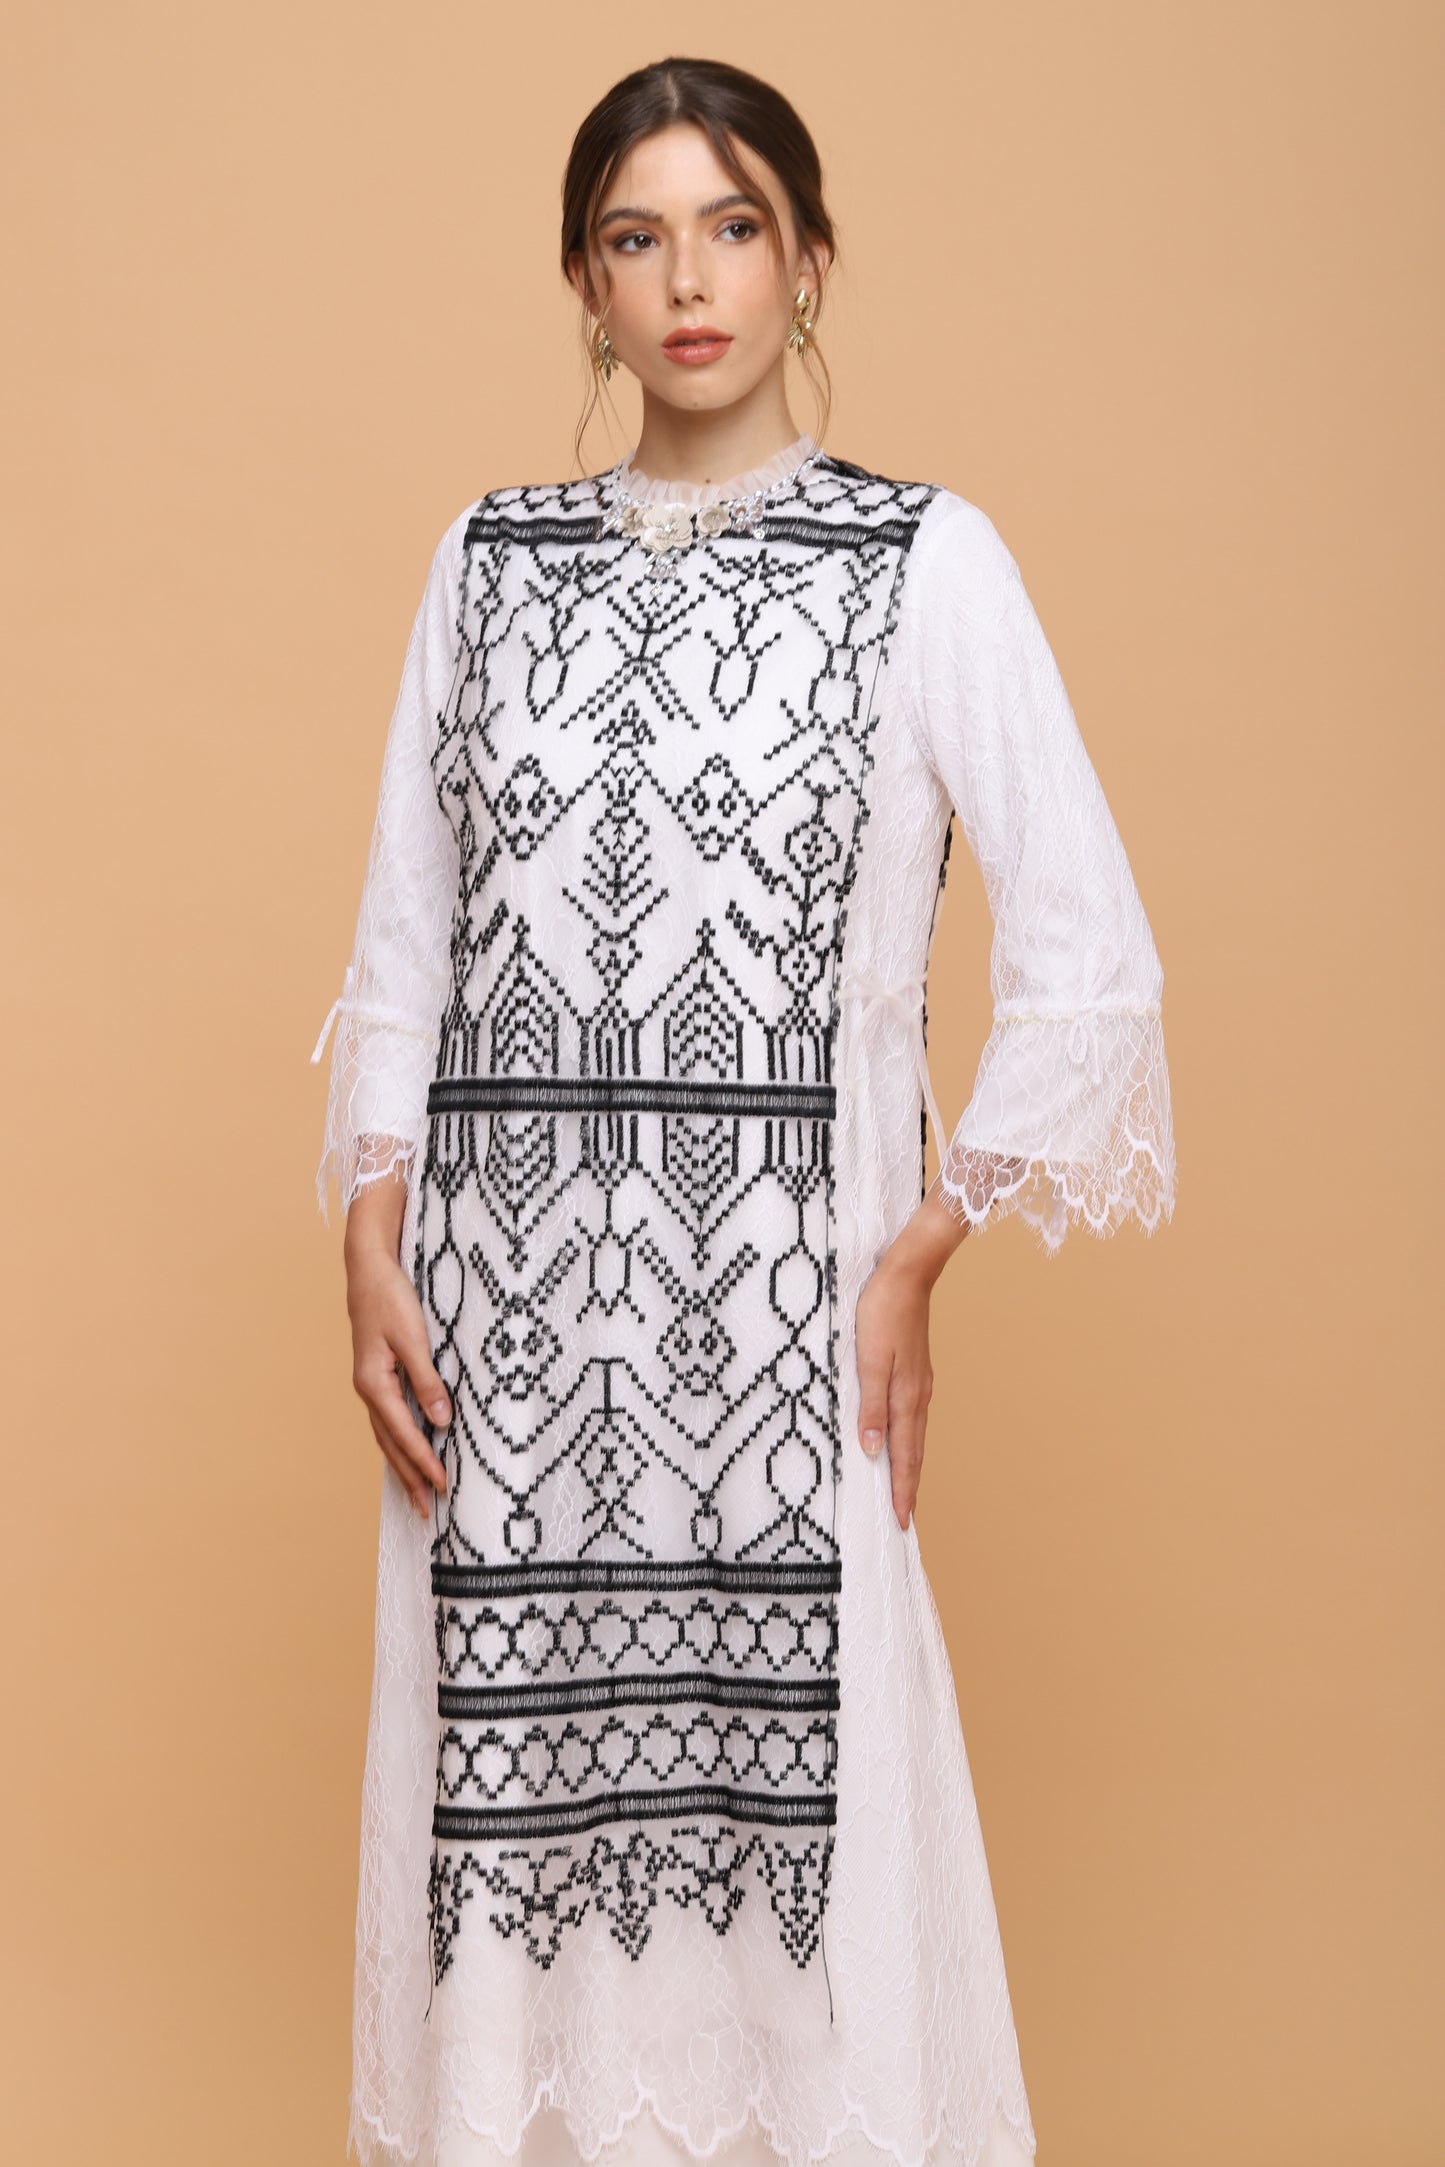 Brave - Black and White Ethnic Dress